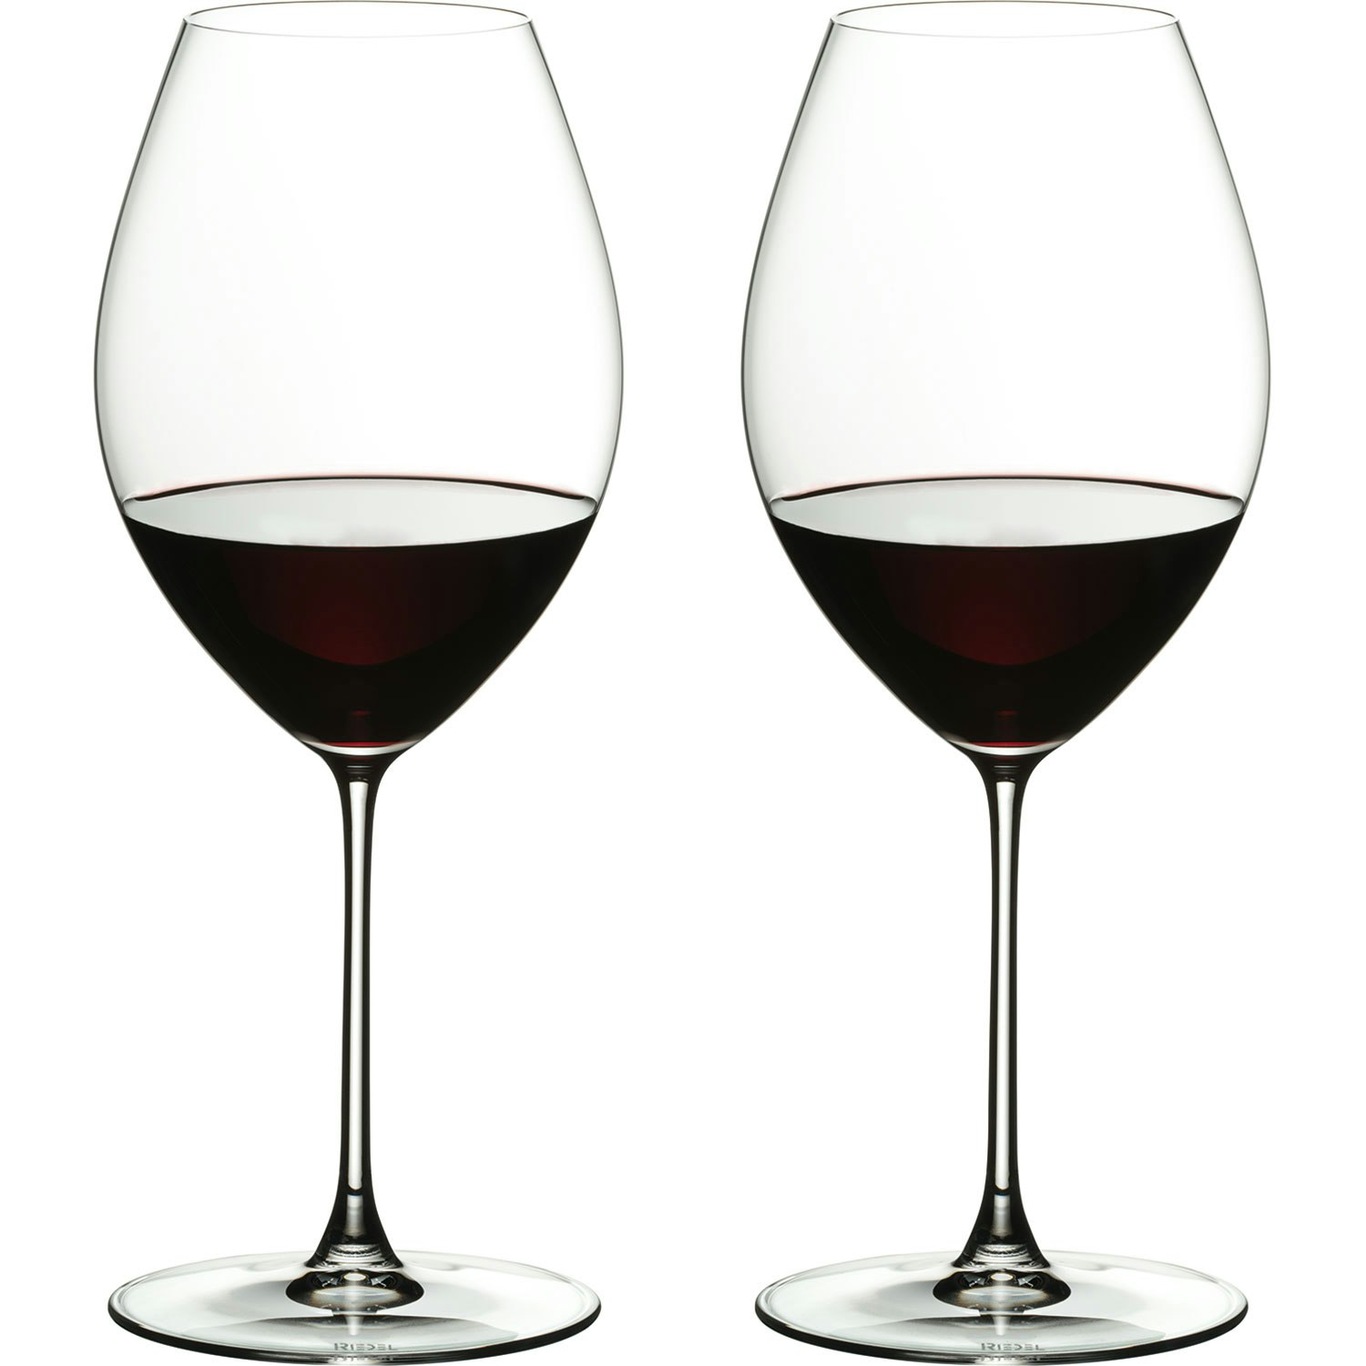 Veritas Old World Syrah Wine Glass 2-pack